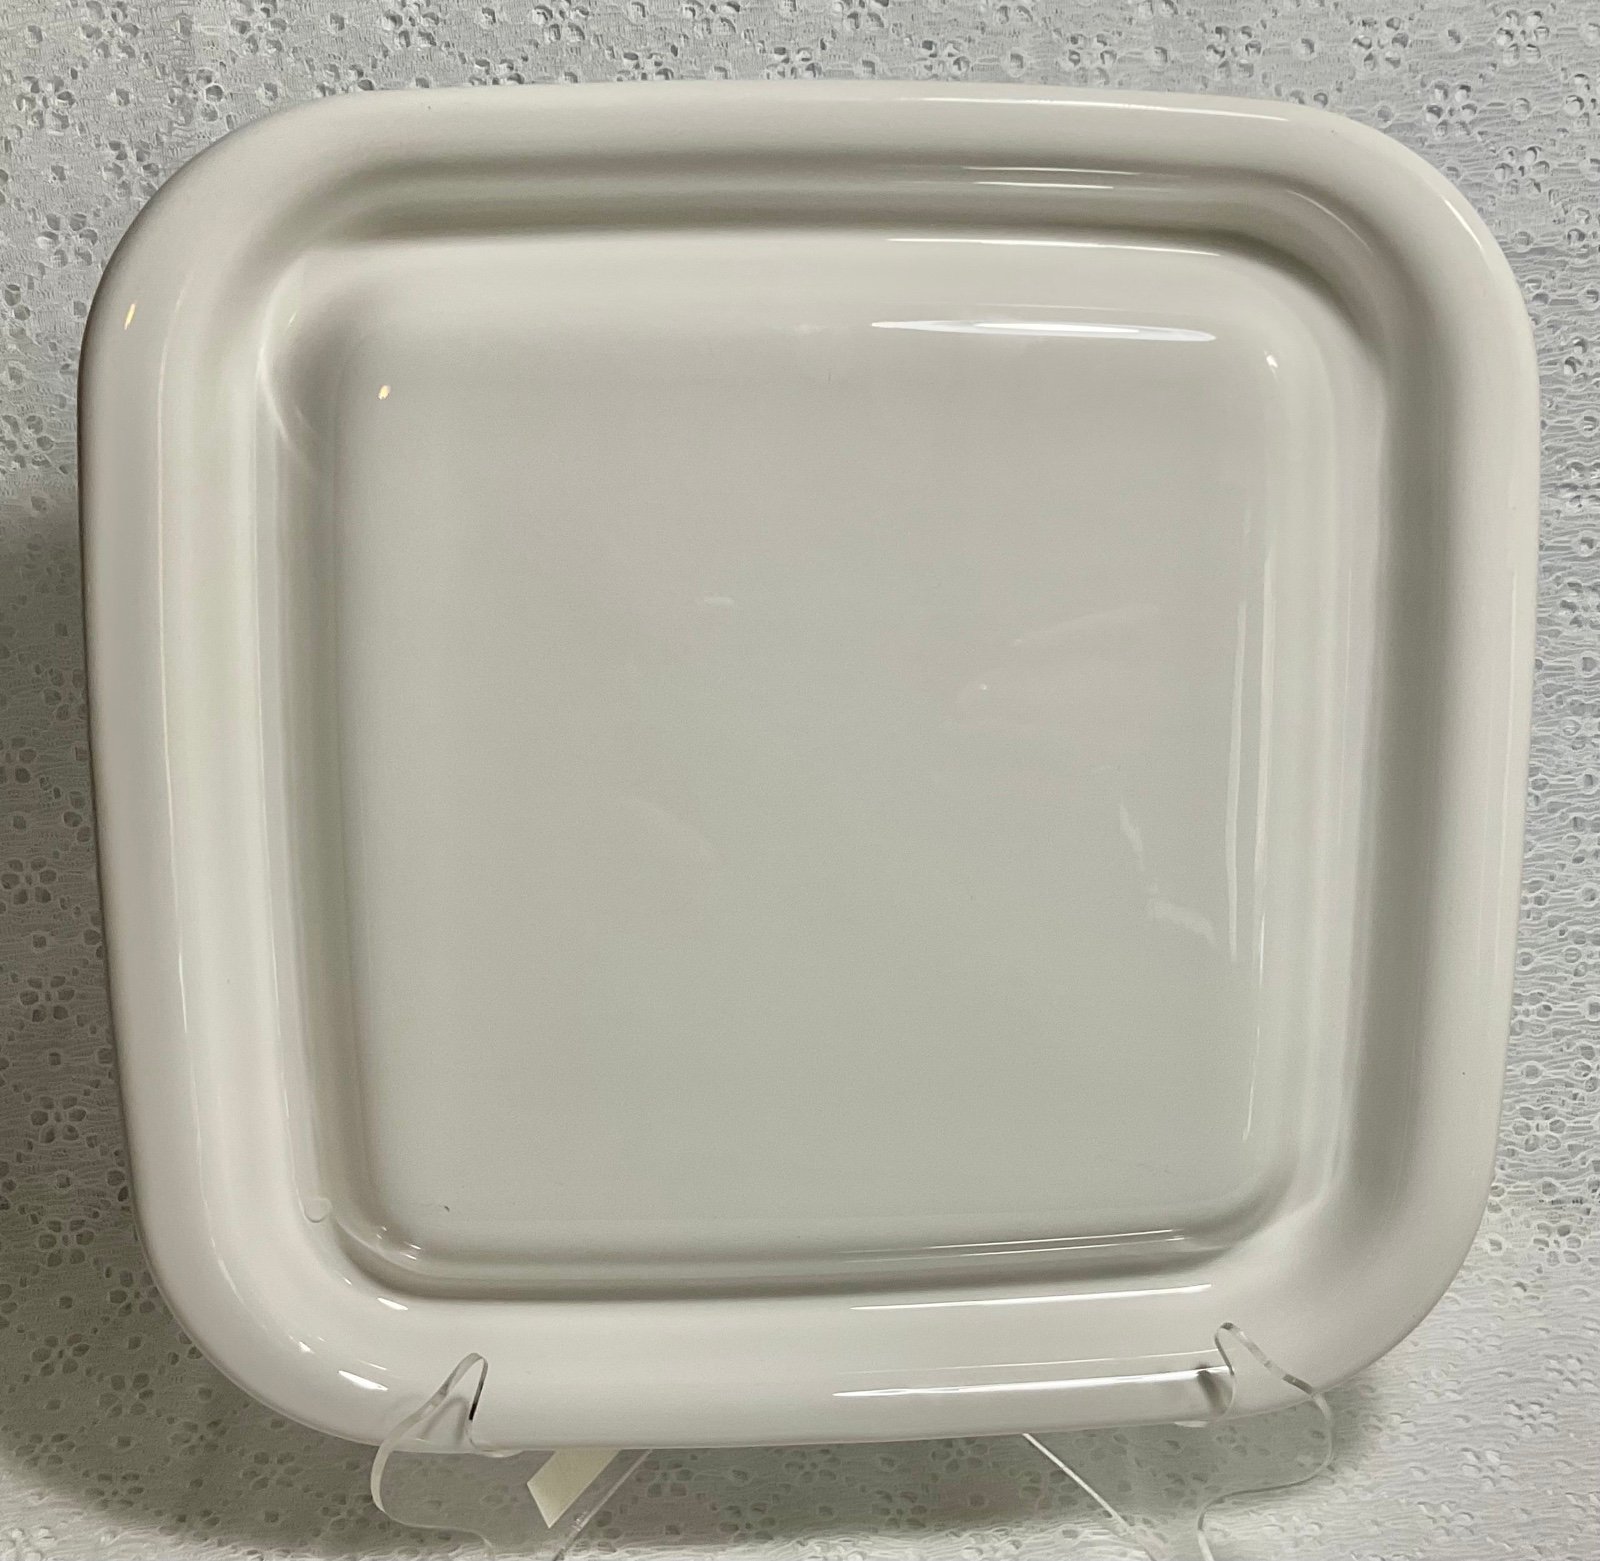 Corningware White Ceramic Microwave Browner Grill MW-2 #2181 cGlHwyzcN